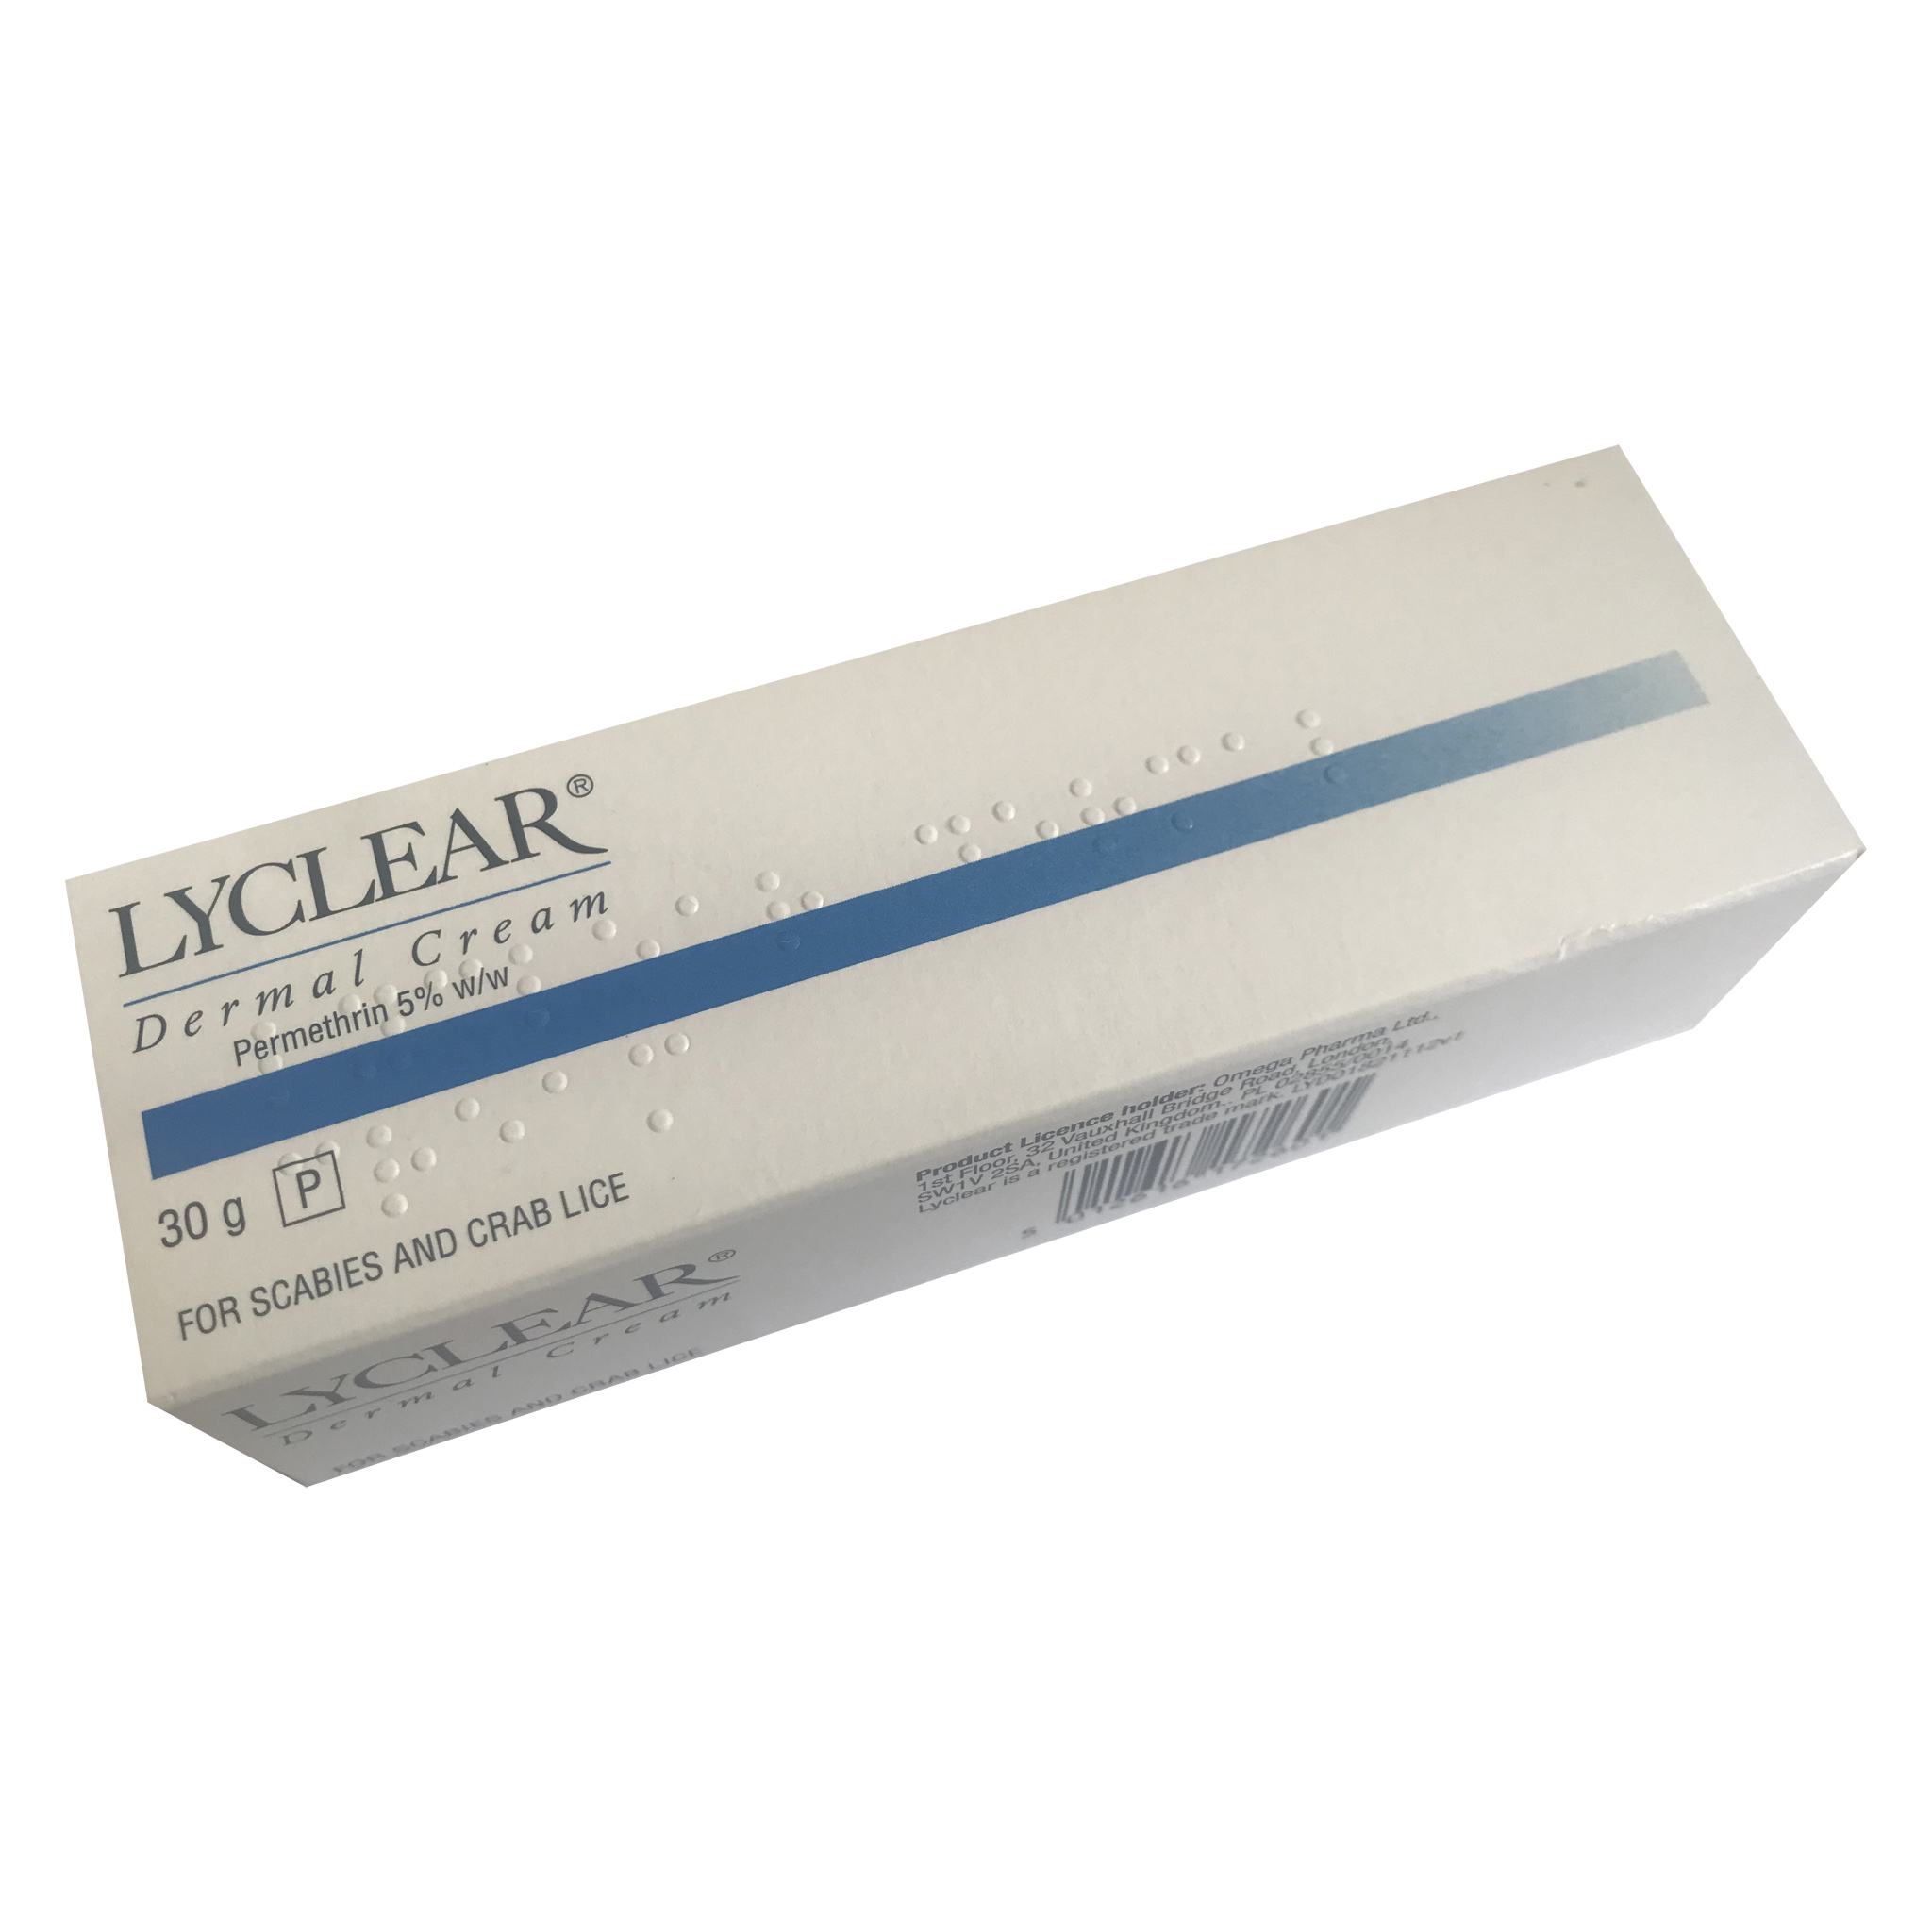 Lyclear Dermal Cream (30g) - 6 Packs